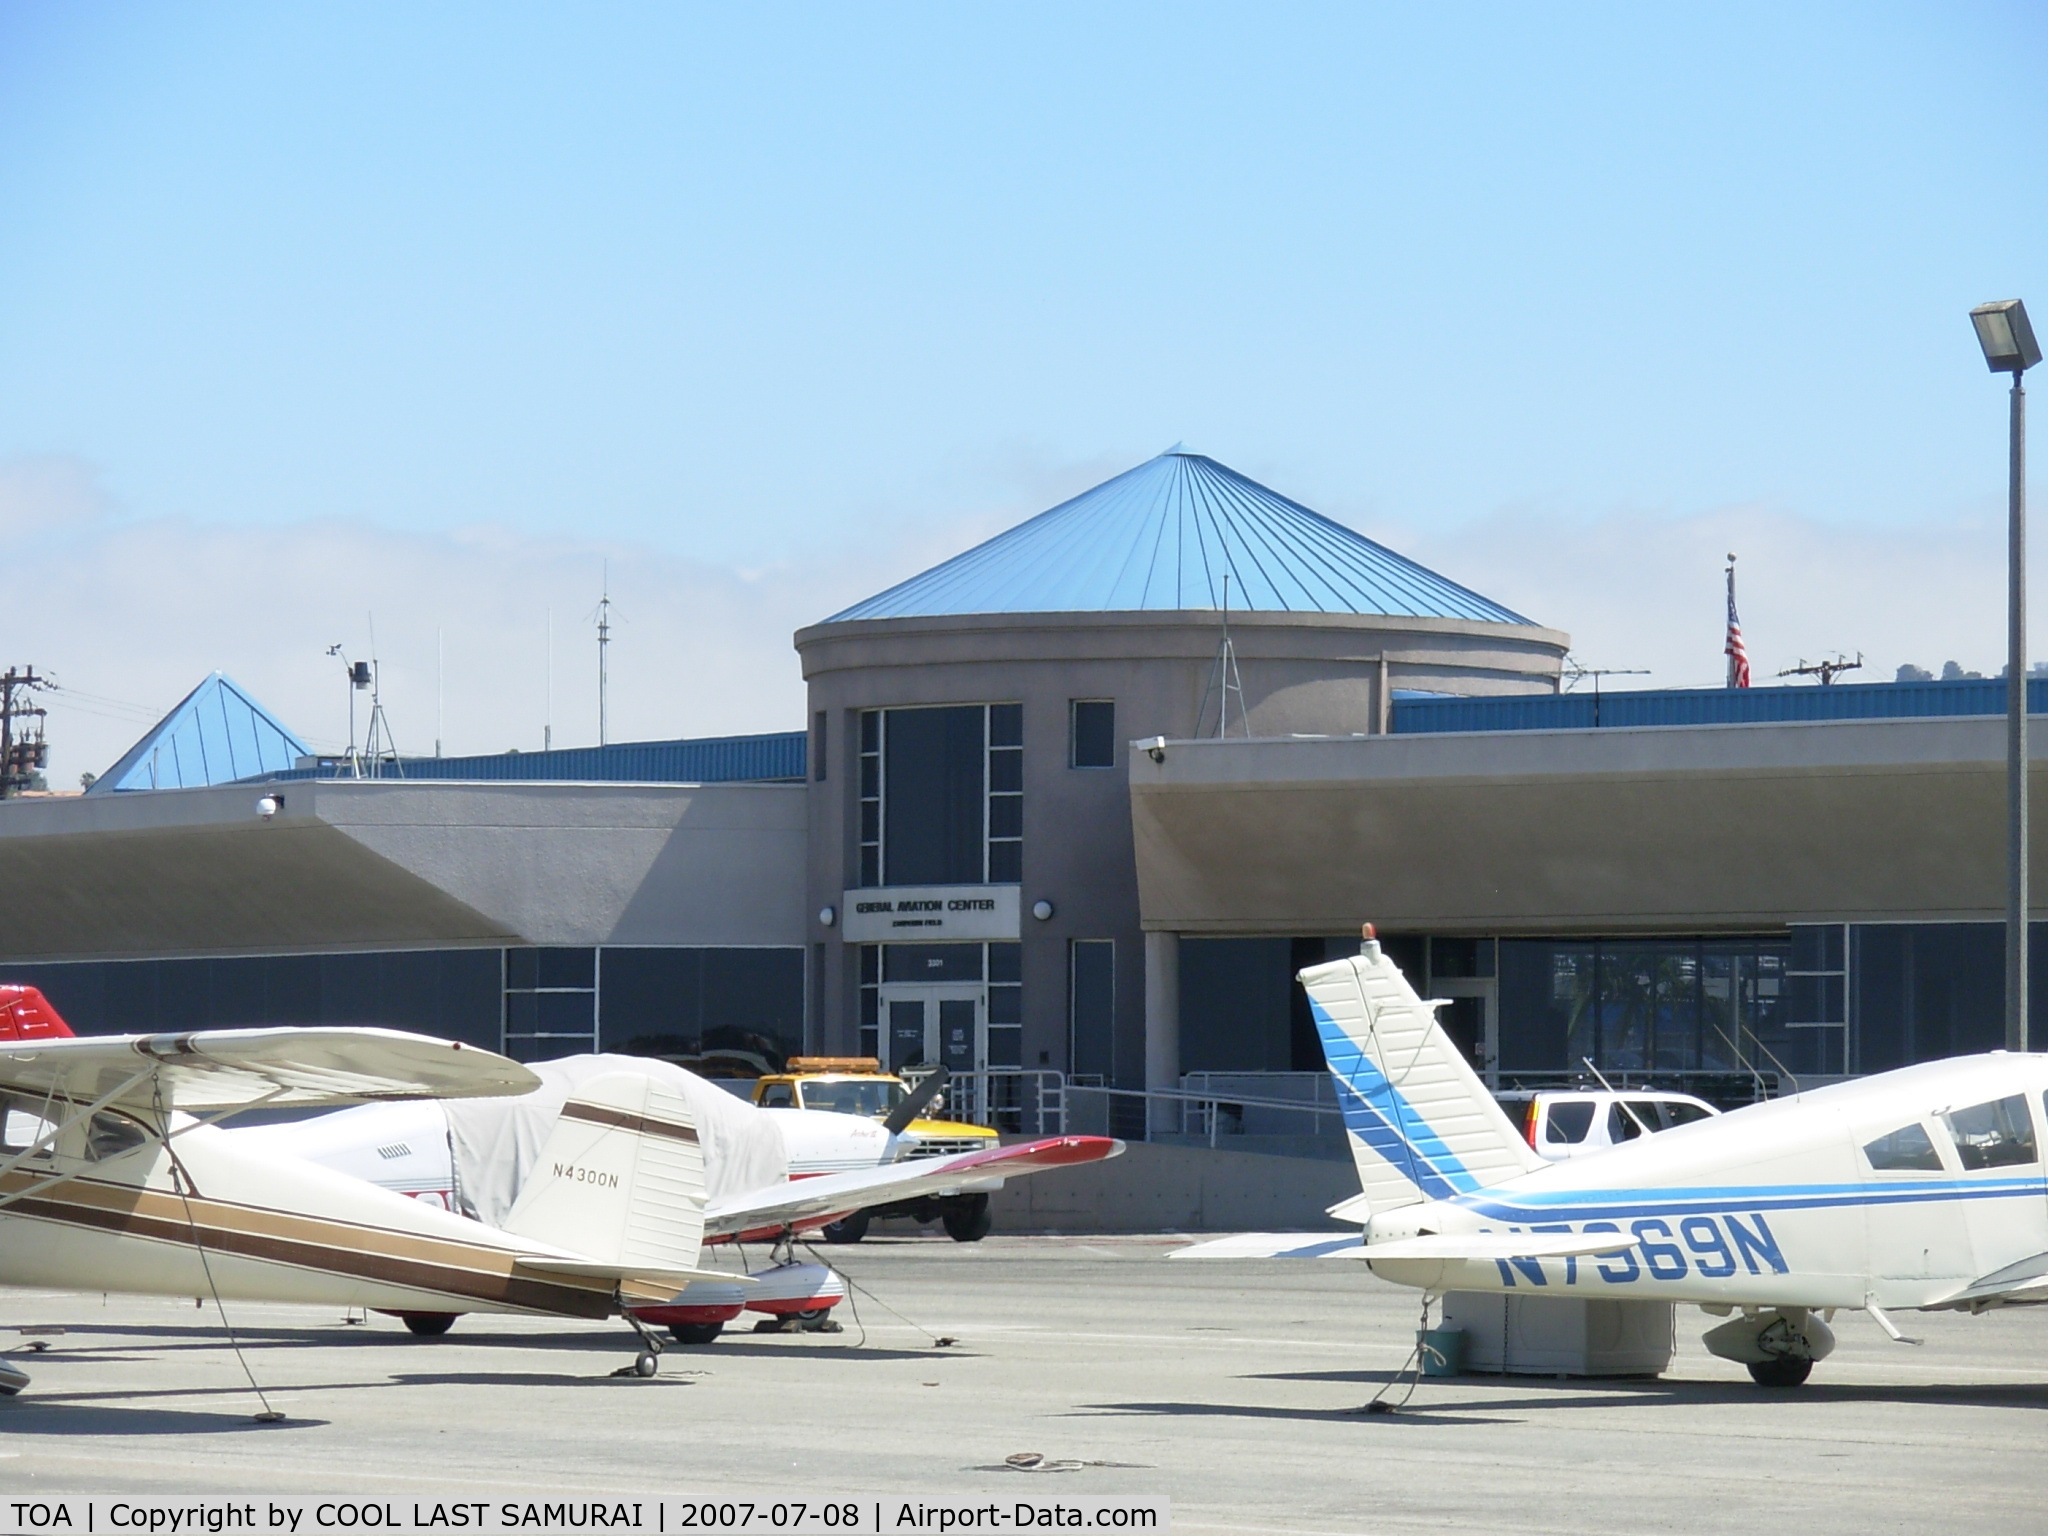 Zamperini Field Airport (TOA) - General aviation center